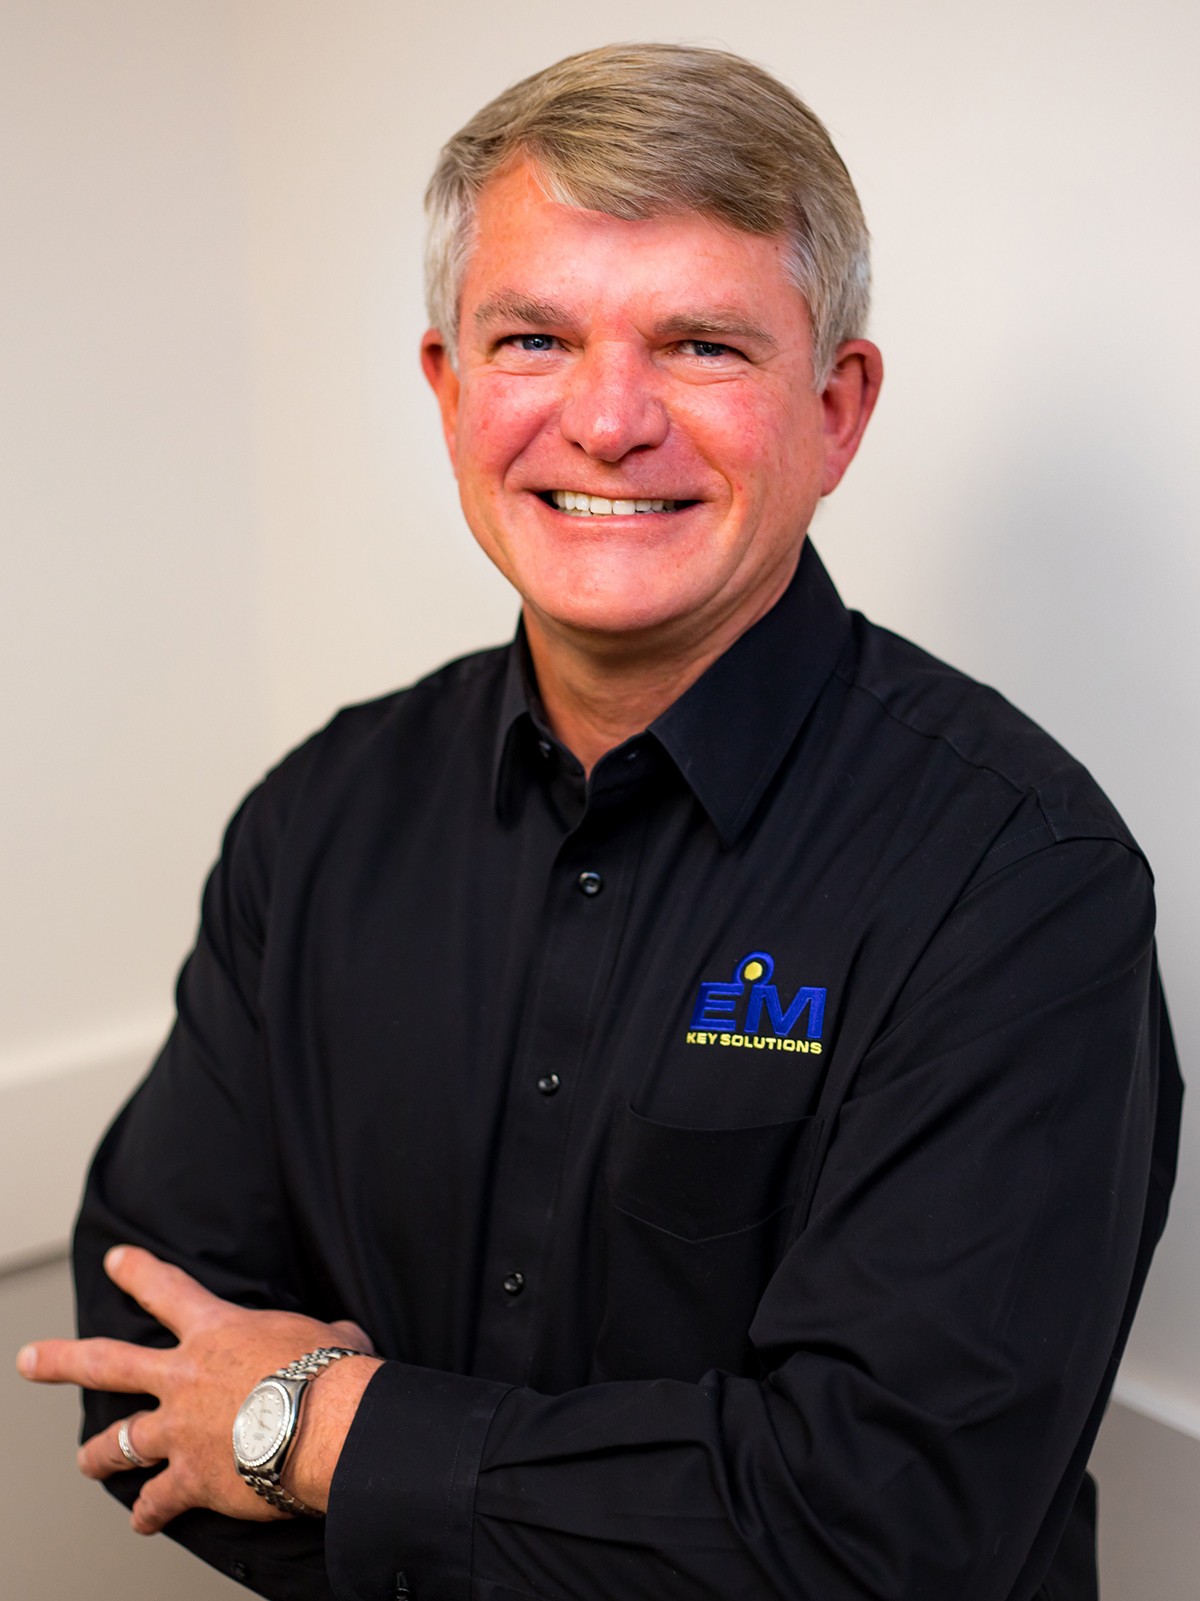 Mike Snyder, CEO of EM Key Solutions